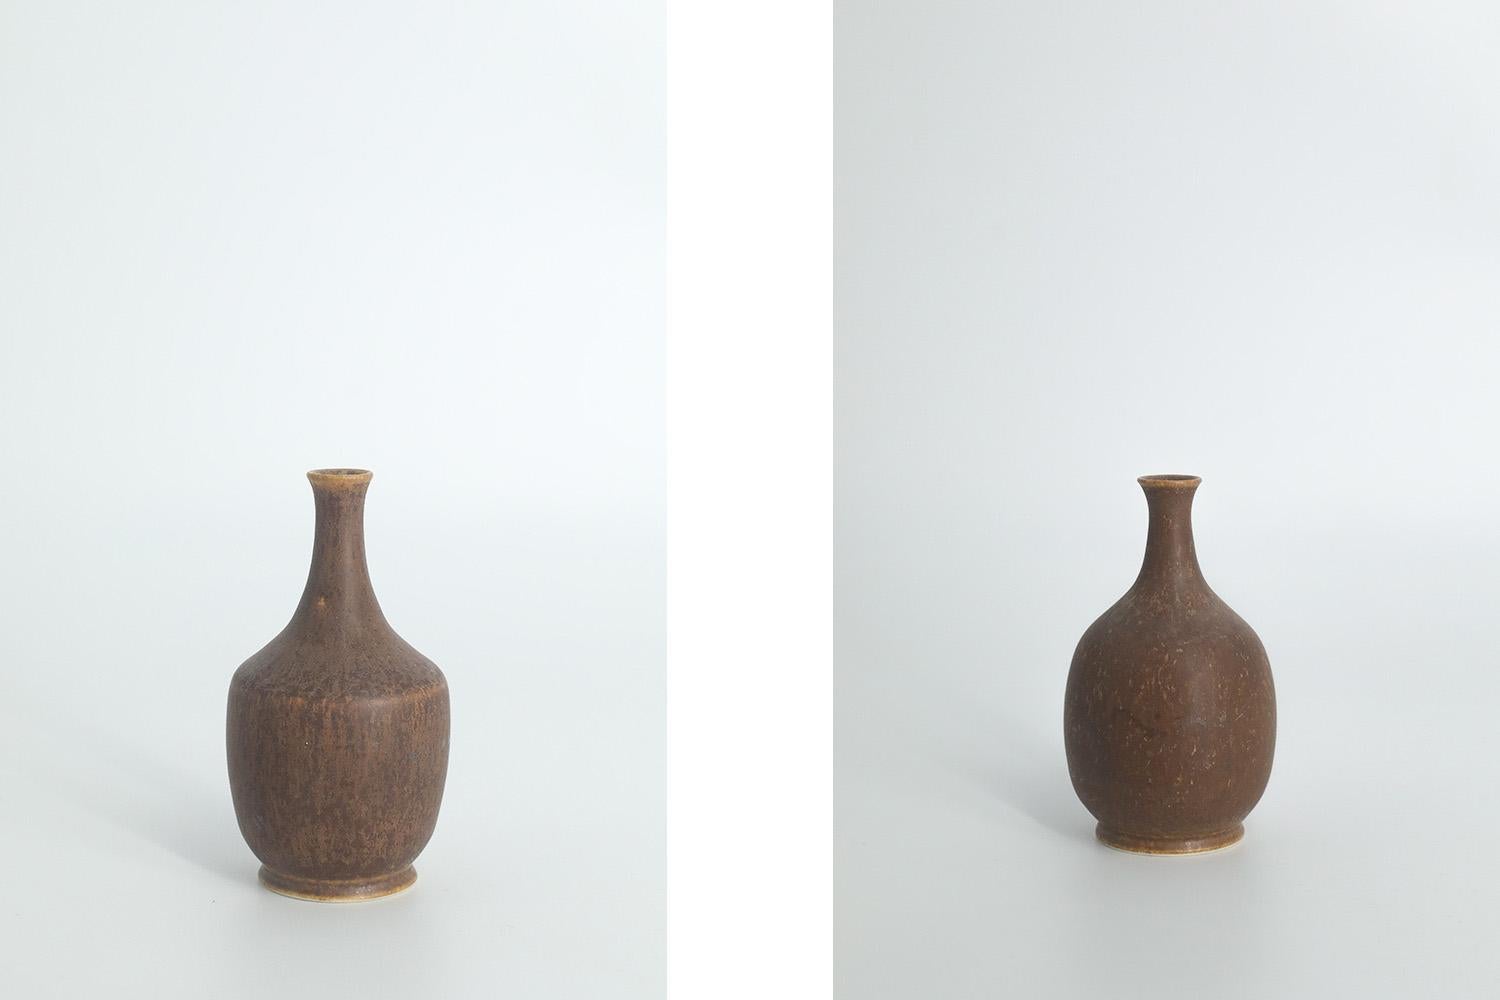 1. Height 8 cm | Width 5 cm | Depth 5 cm
2. Height 8 cm | Width 4.5 cm | Depth 4.5 cm
3. Height 6 cm | Width 3 cm | Depth 3 cm
4. Height 5 cm | Width 2.5 cm | Depth 2.5 cm

This set of 4 miniature vases was designed by Gunnar Borg for the Swedish